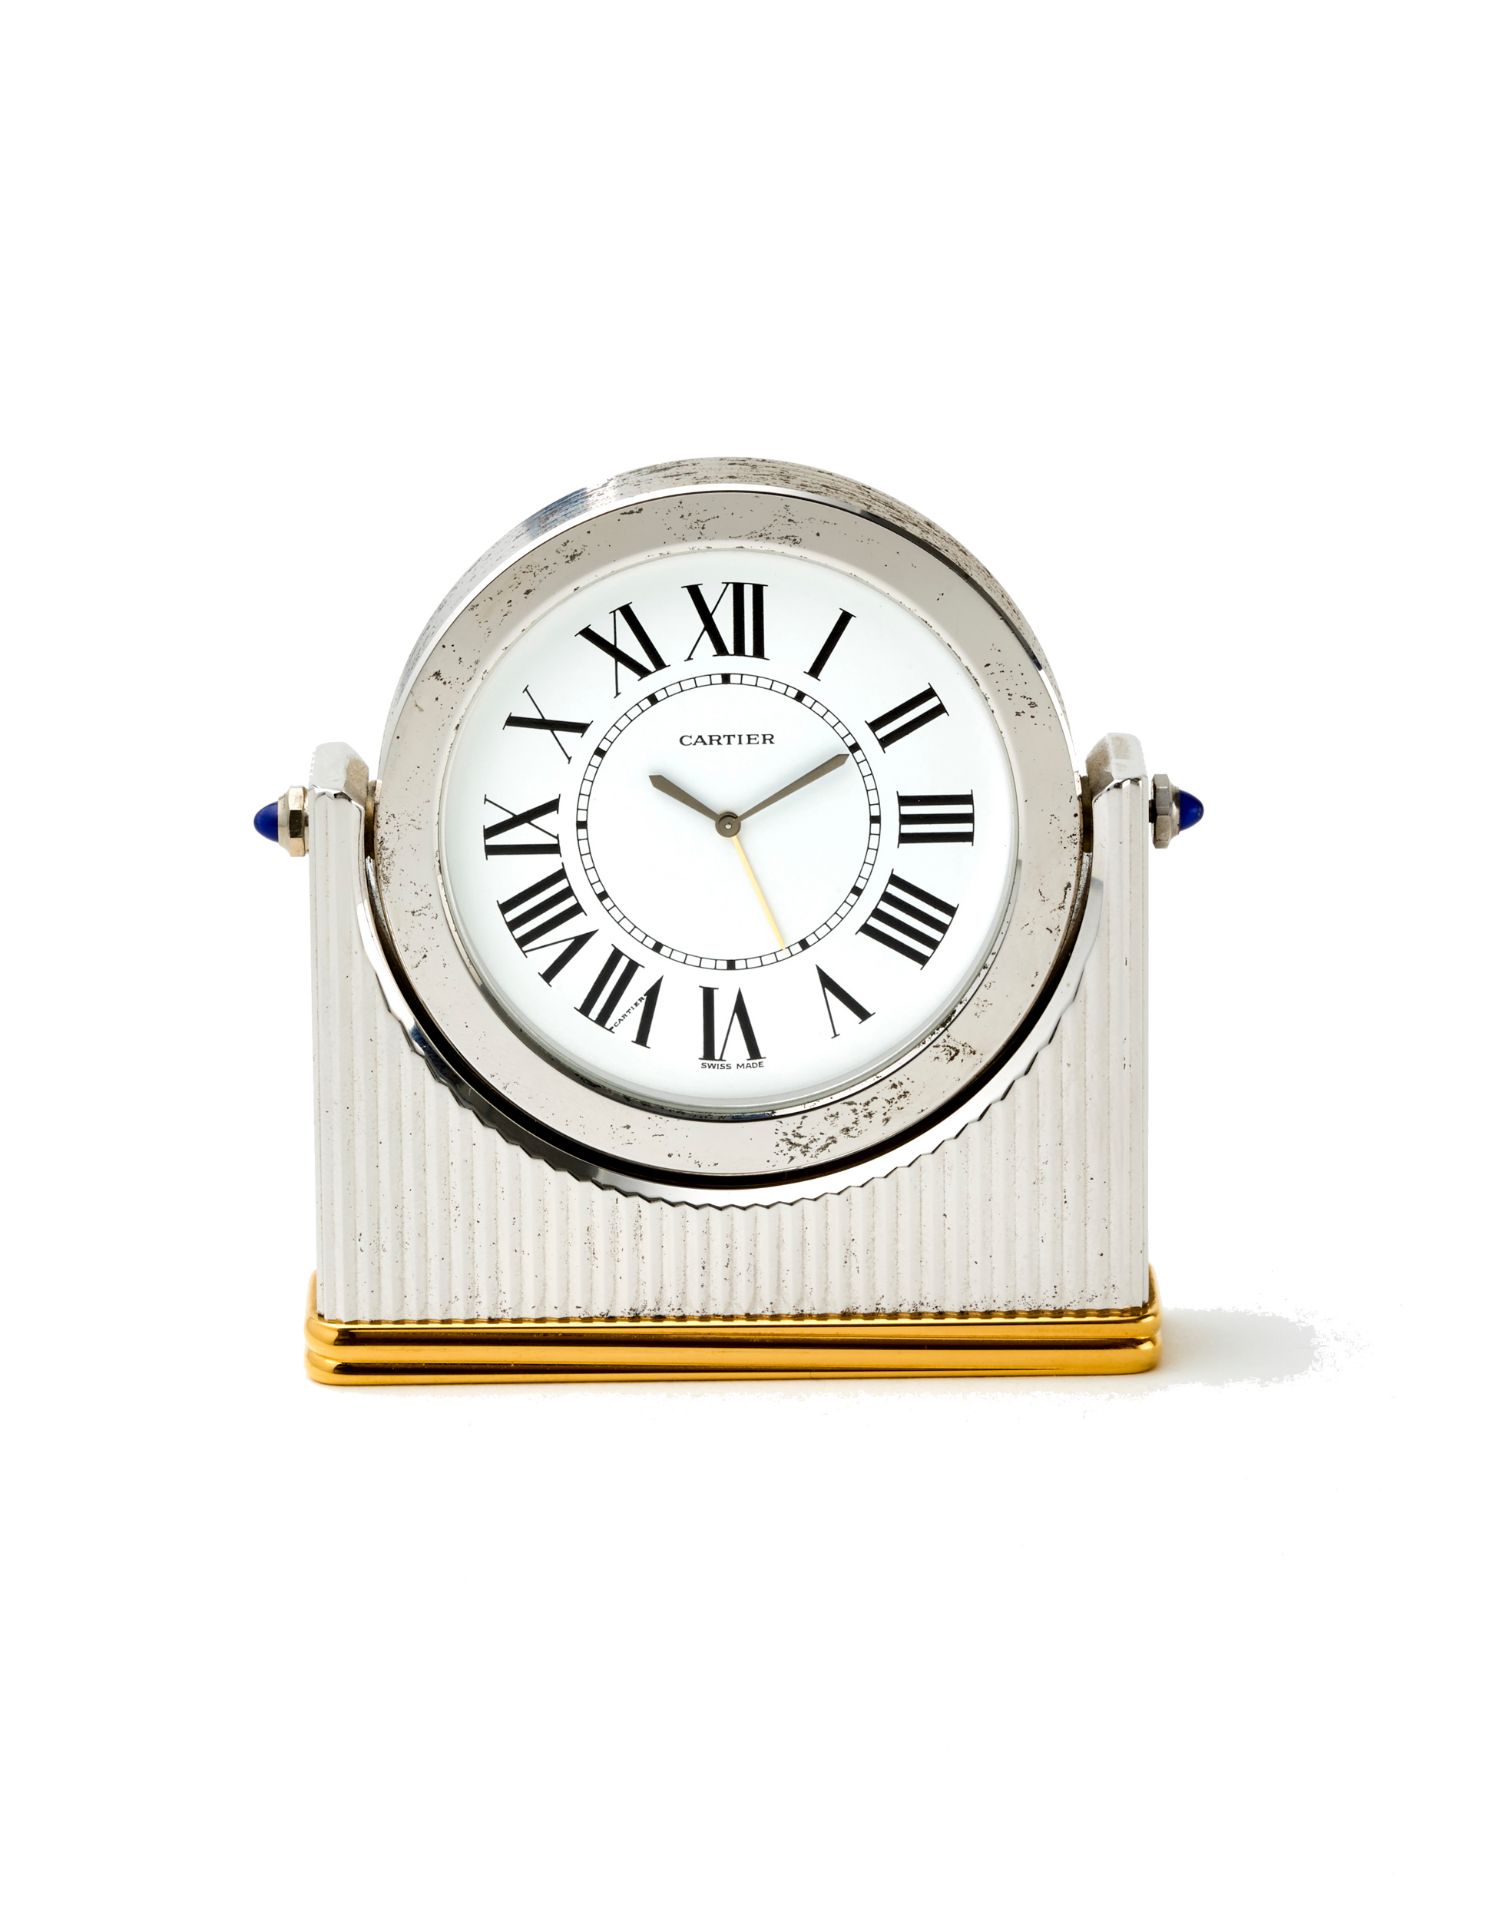 CartierTable Clock1960sDial signedQuartz movementWhite dial with Roman numeralsh. cm 8x7(slight